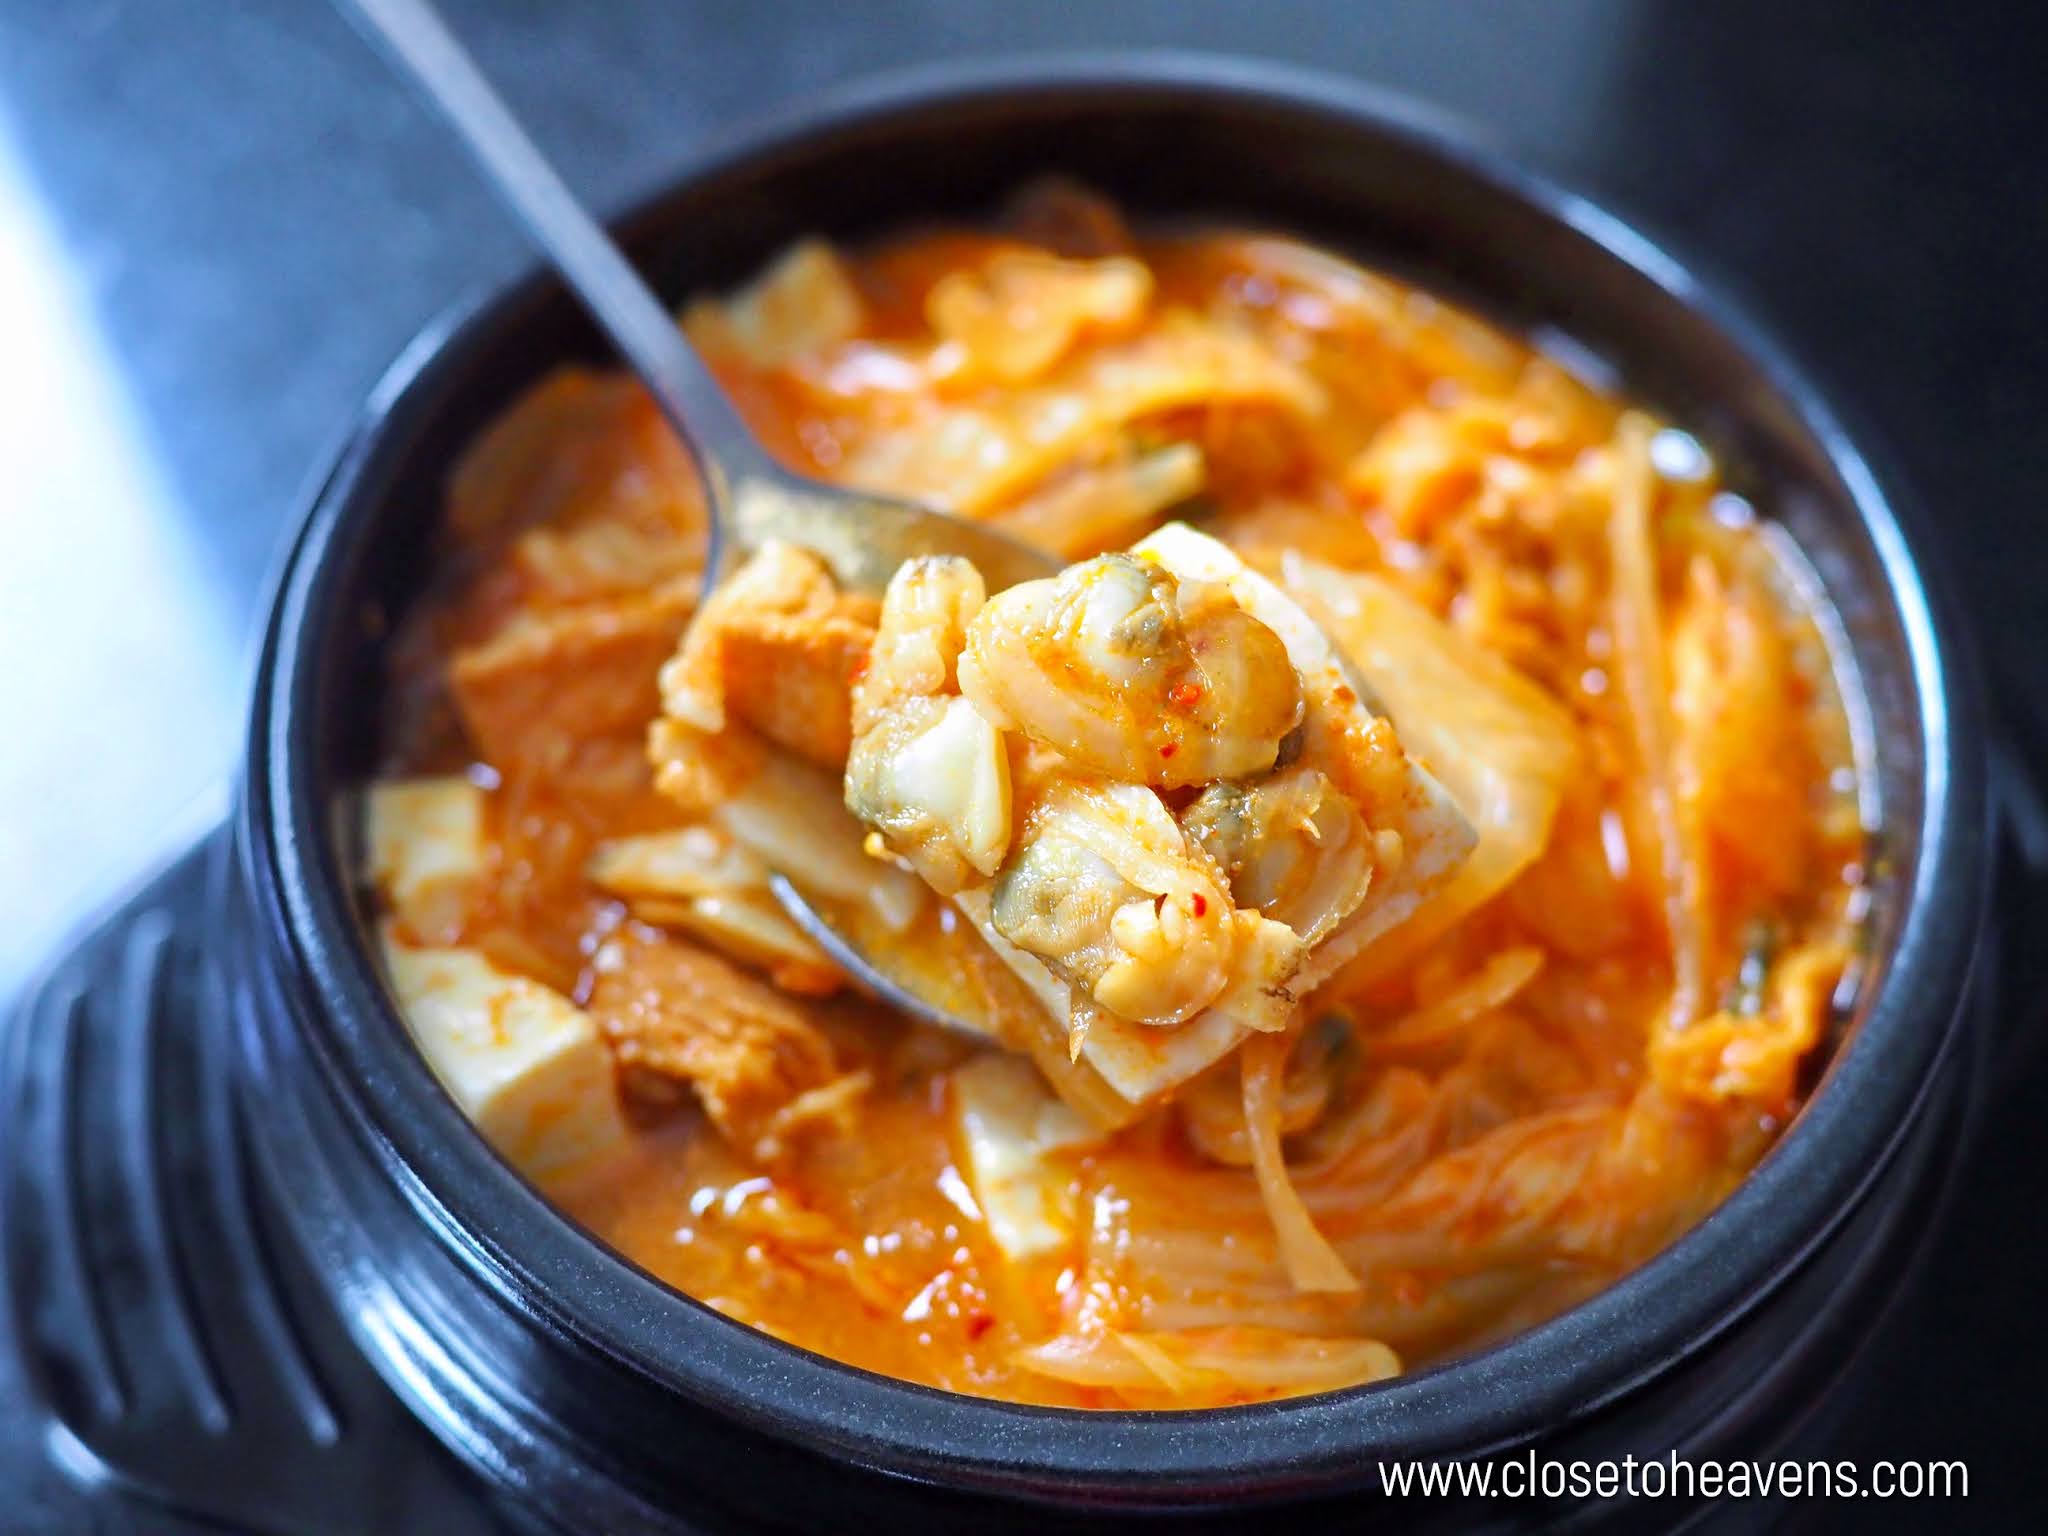 Yoona Korean Food อาหารเกาหลี delivery